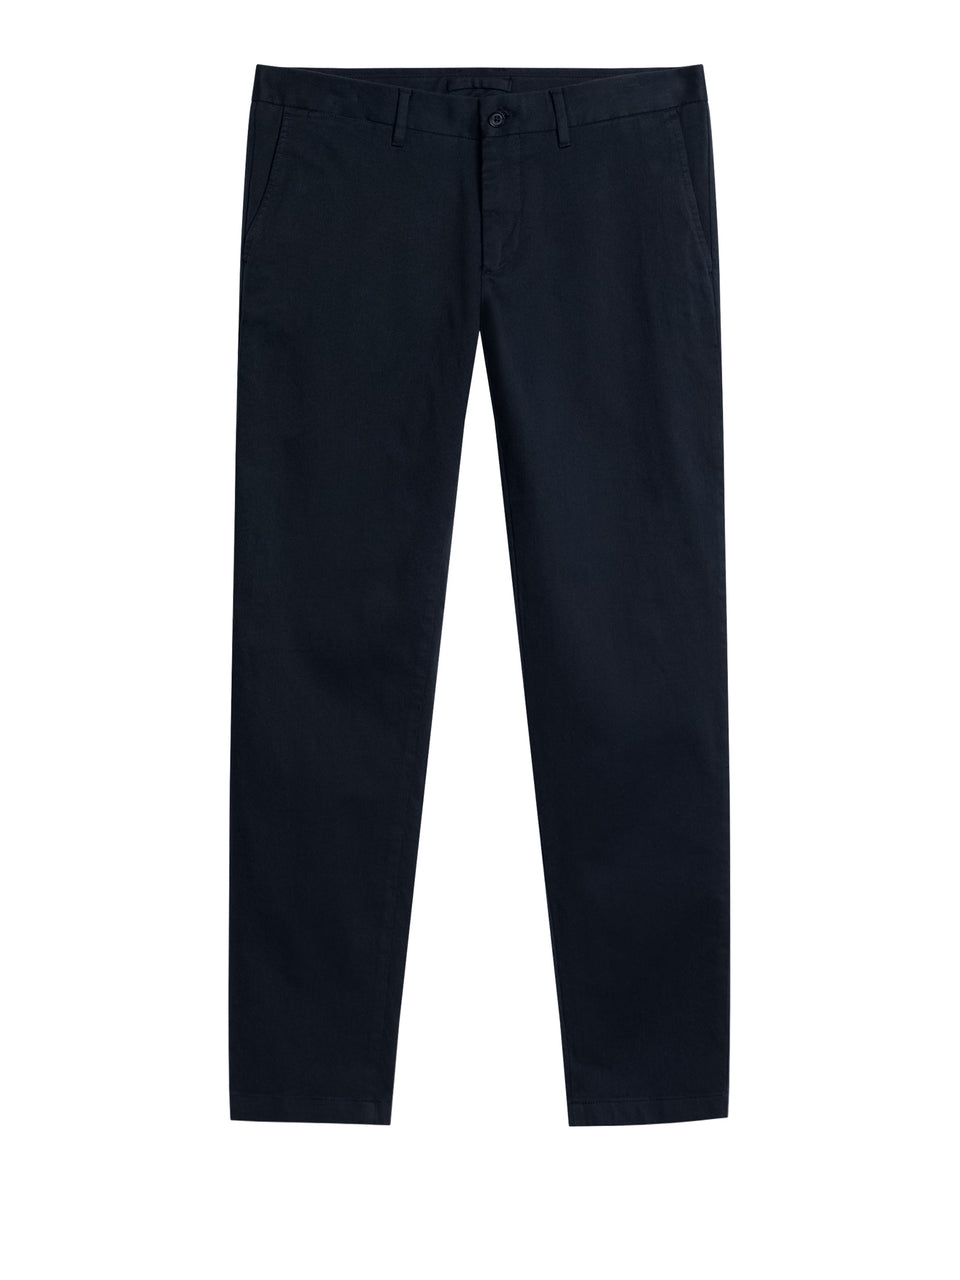 Chaze Flannel Twill Pants / JL Navy